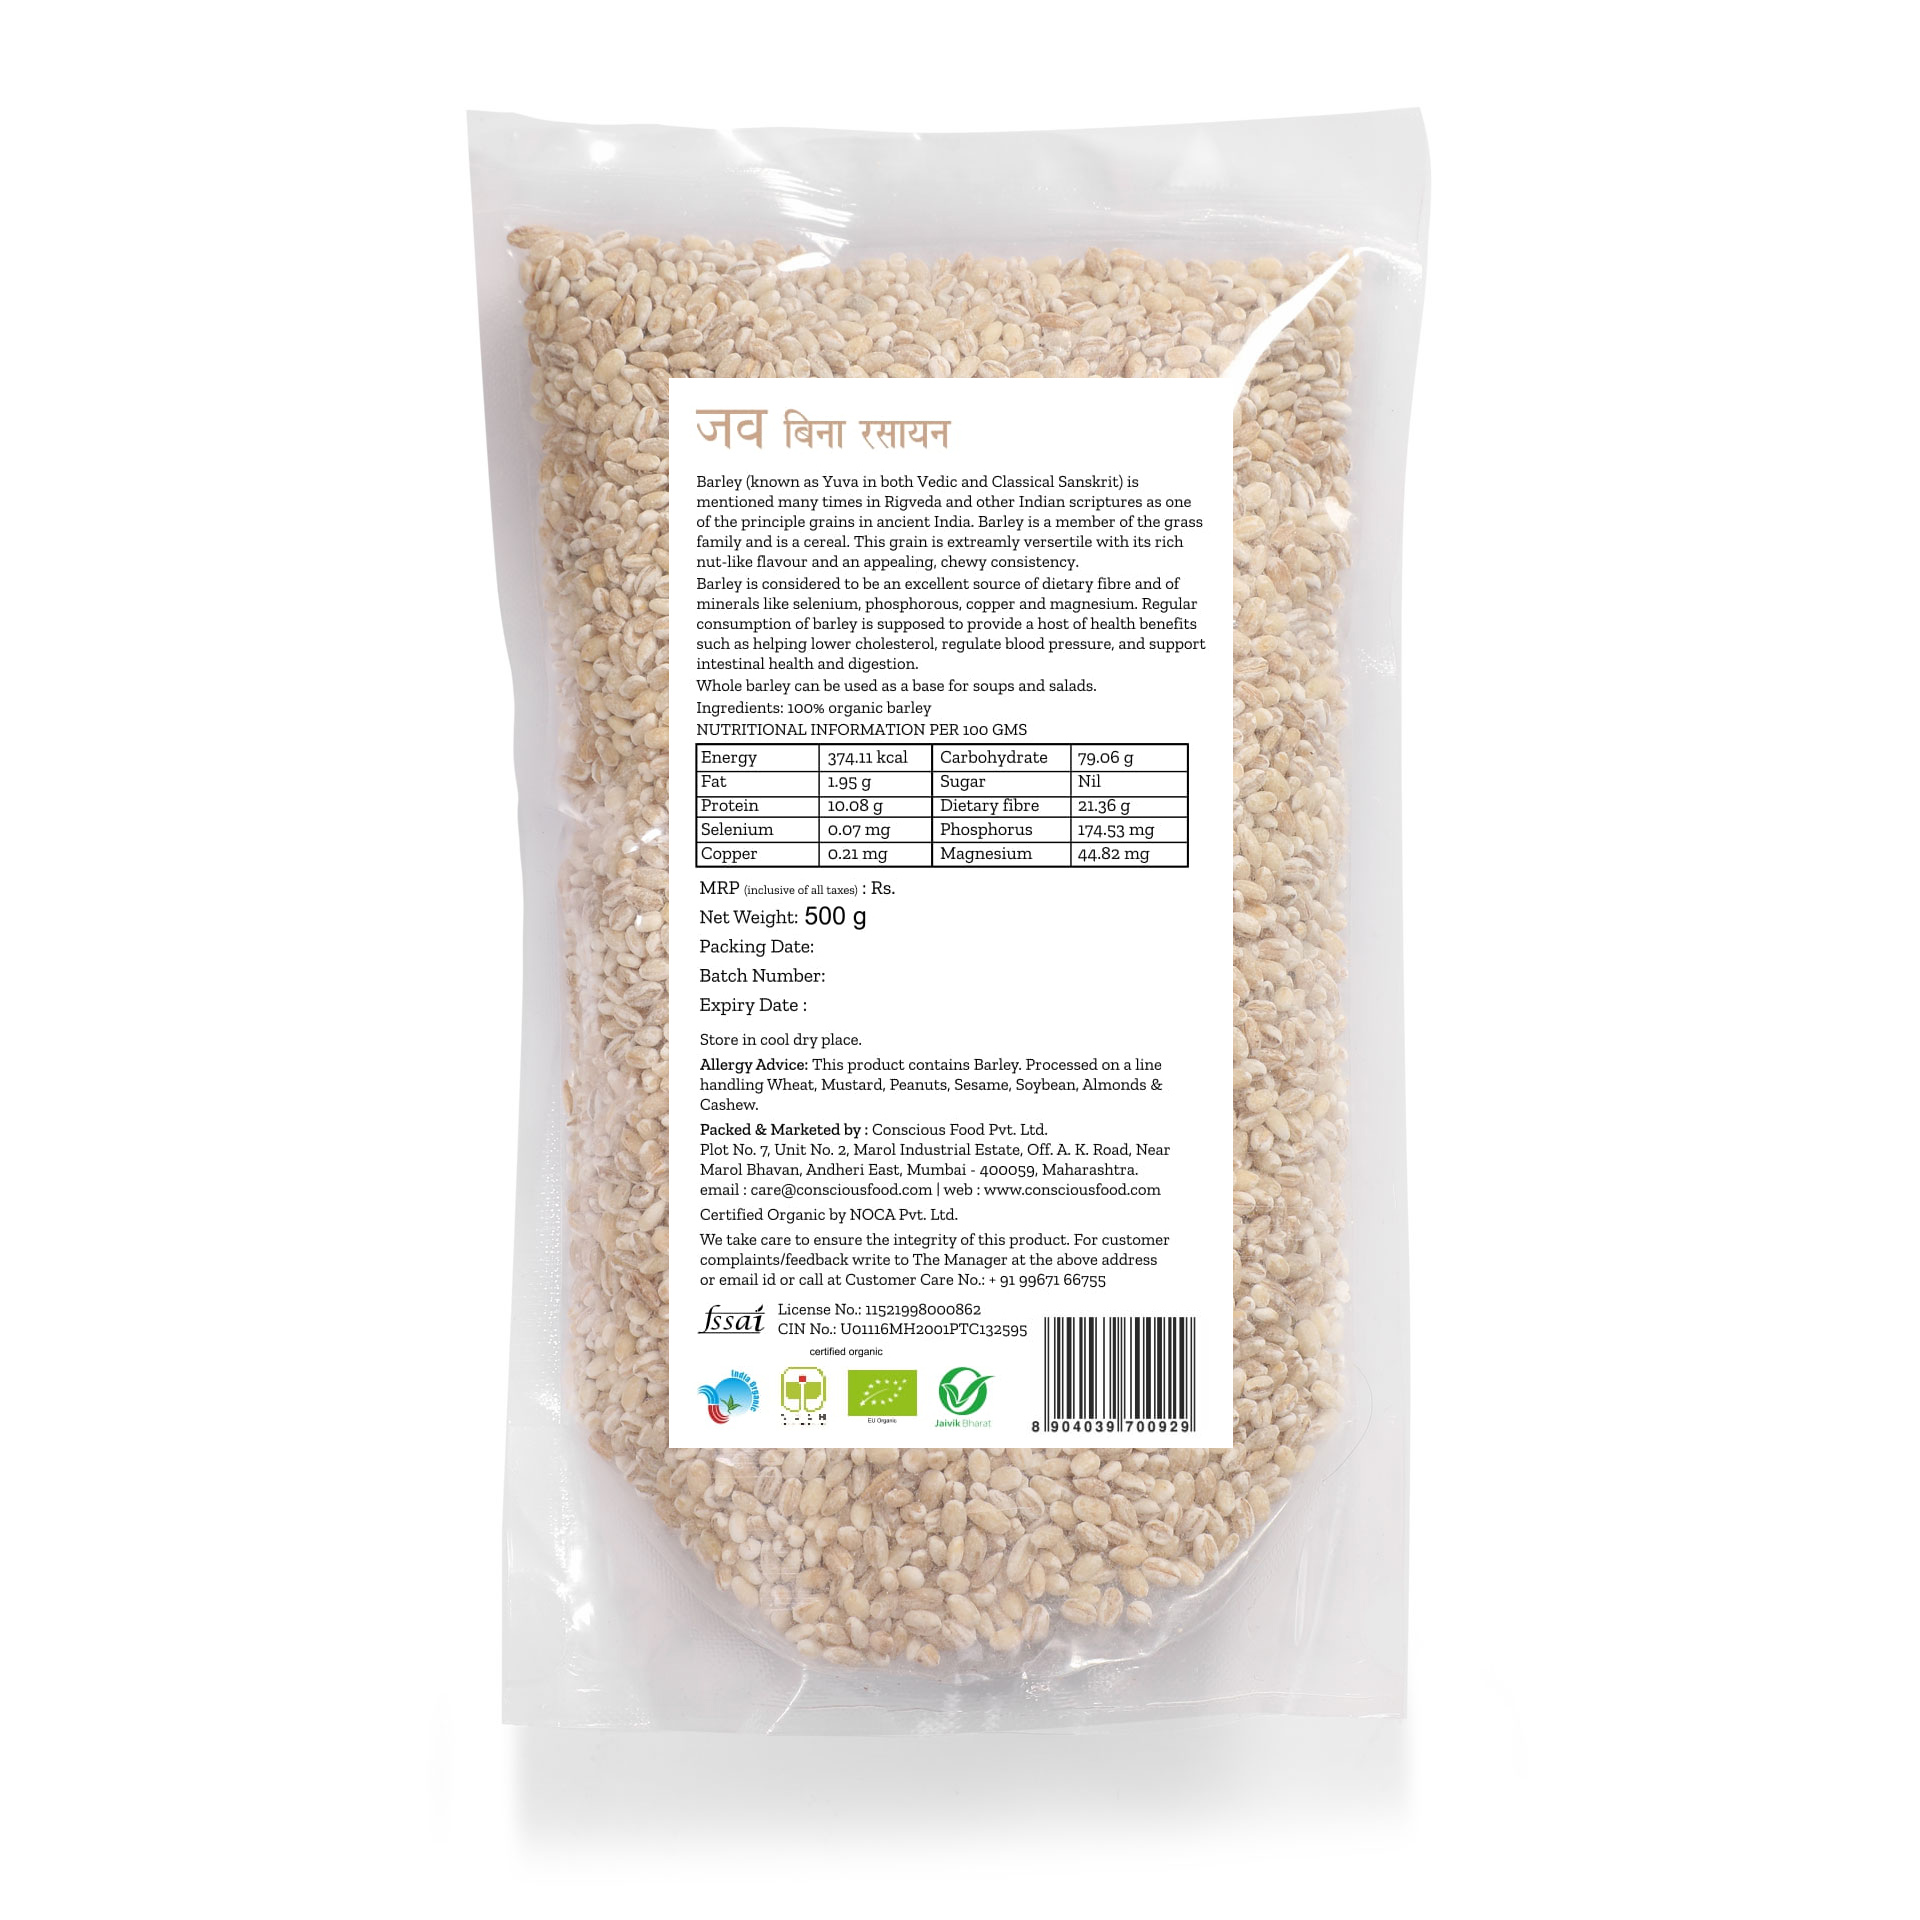 Product: Conscious Food Barley 500g